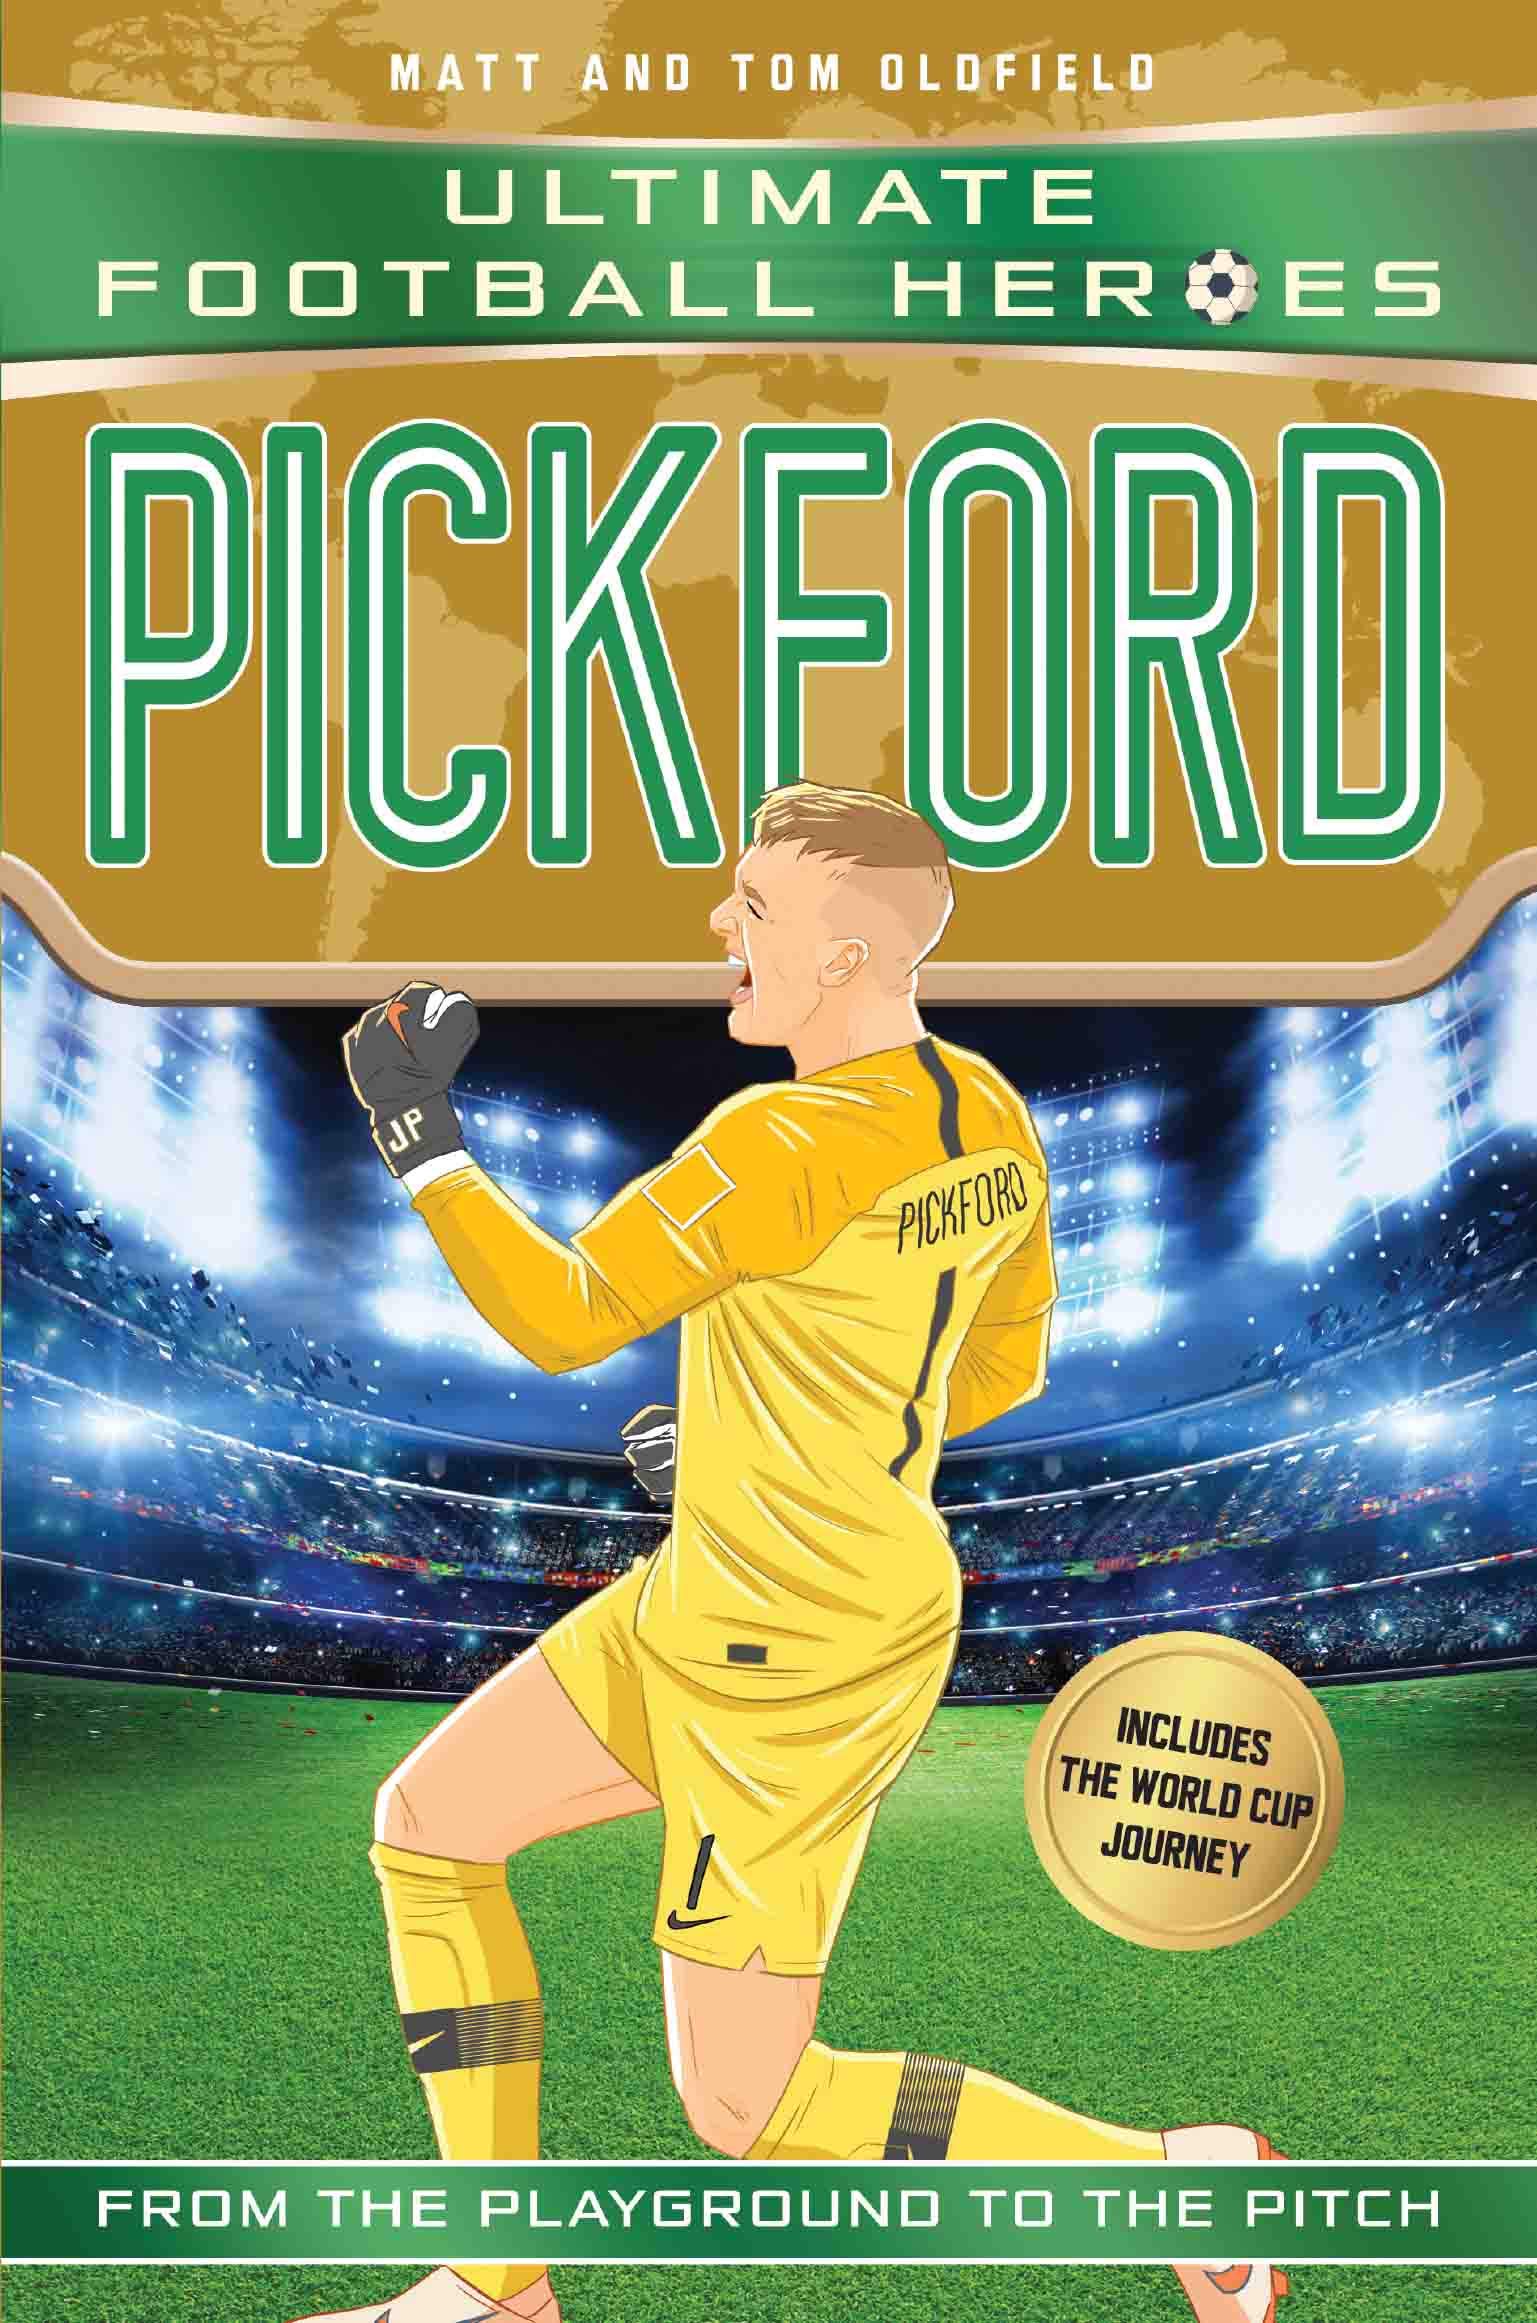 Pickford